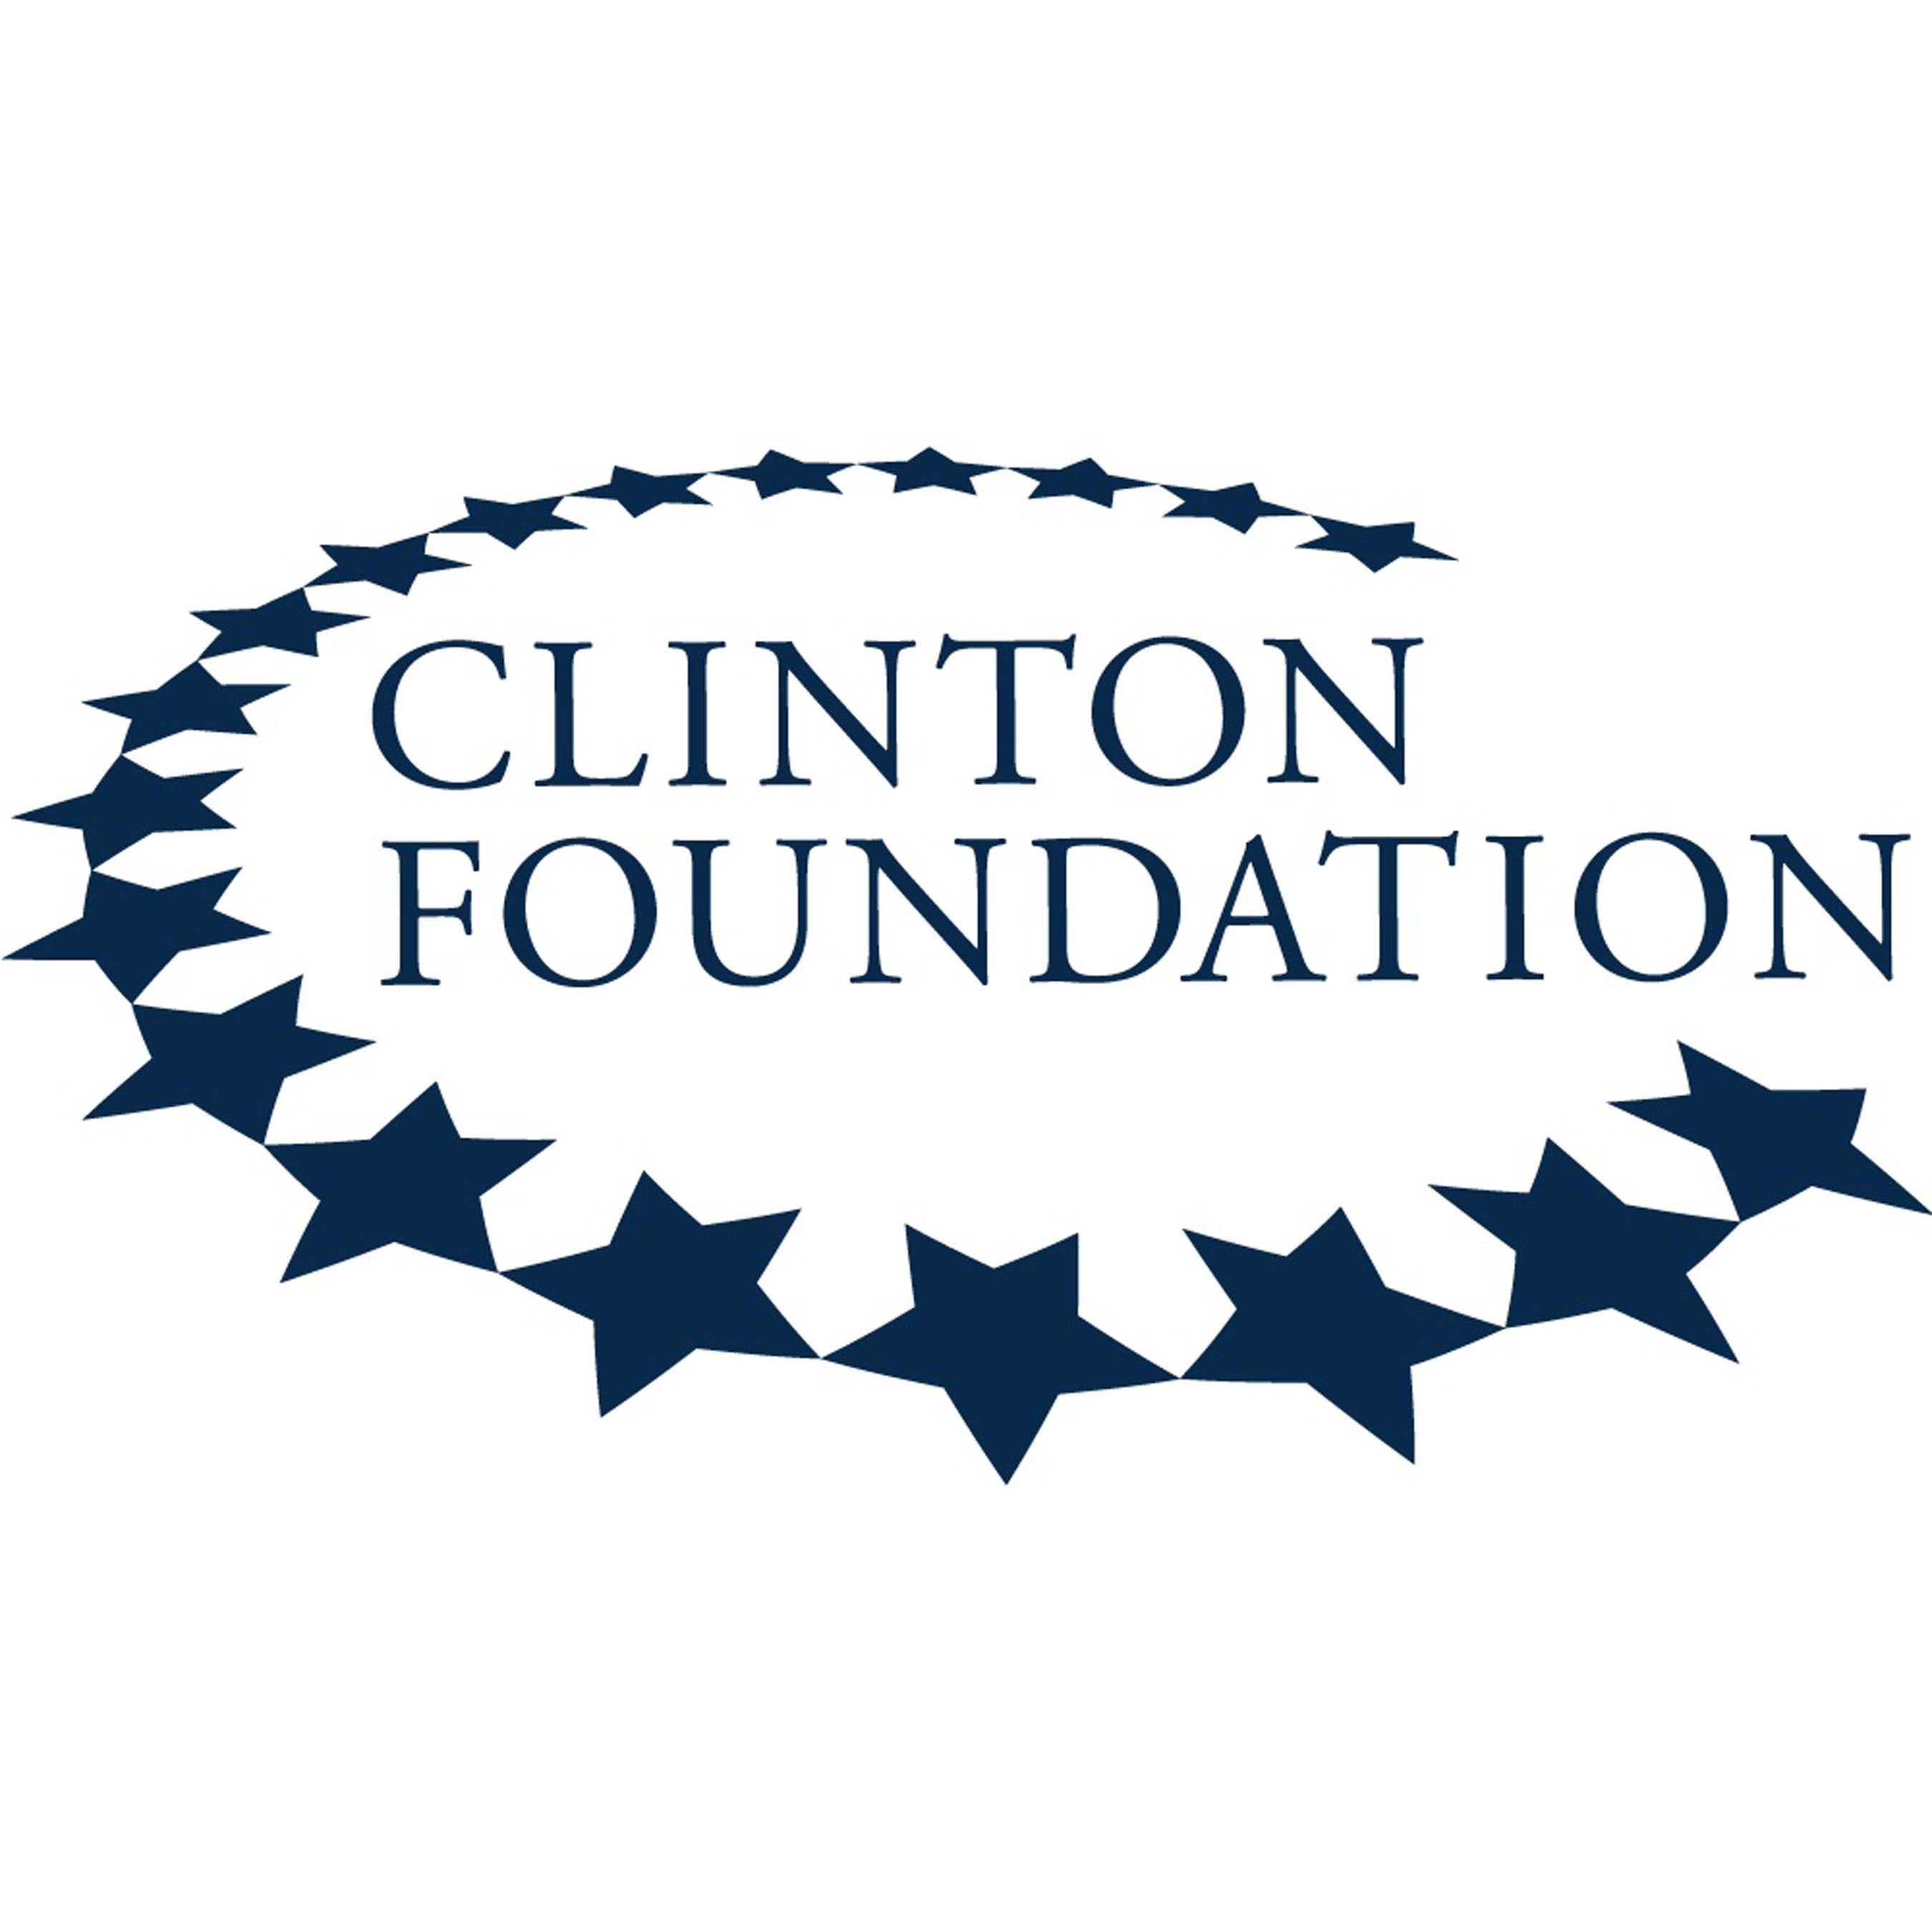 Clinton Foundation Logo. (PRNewsFoto/Univision) (PRNewsFoto/UNIVISION)